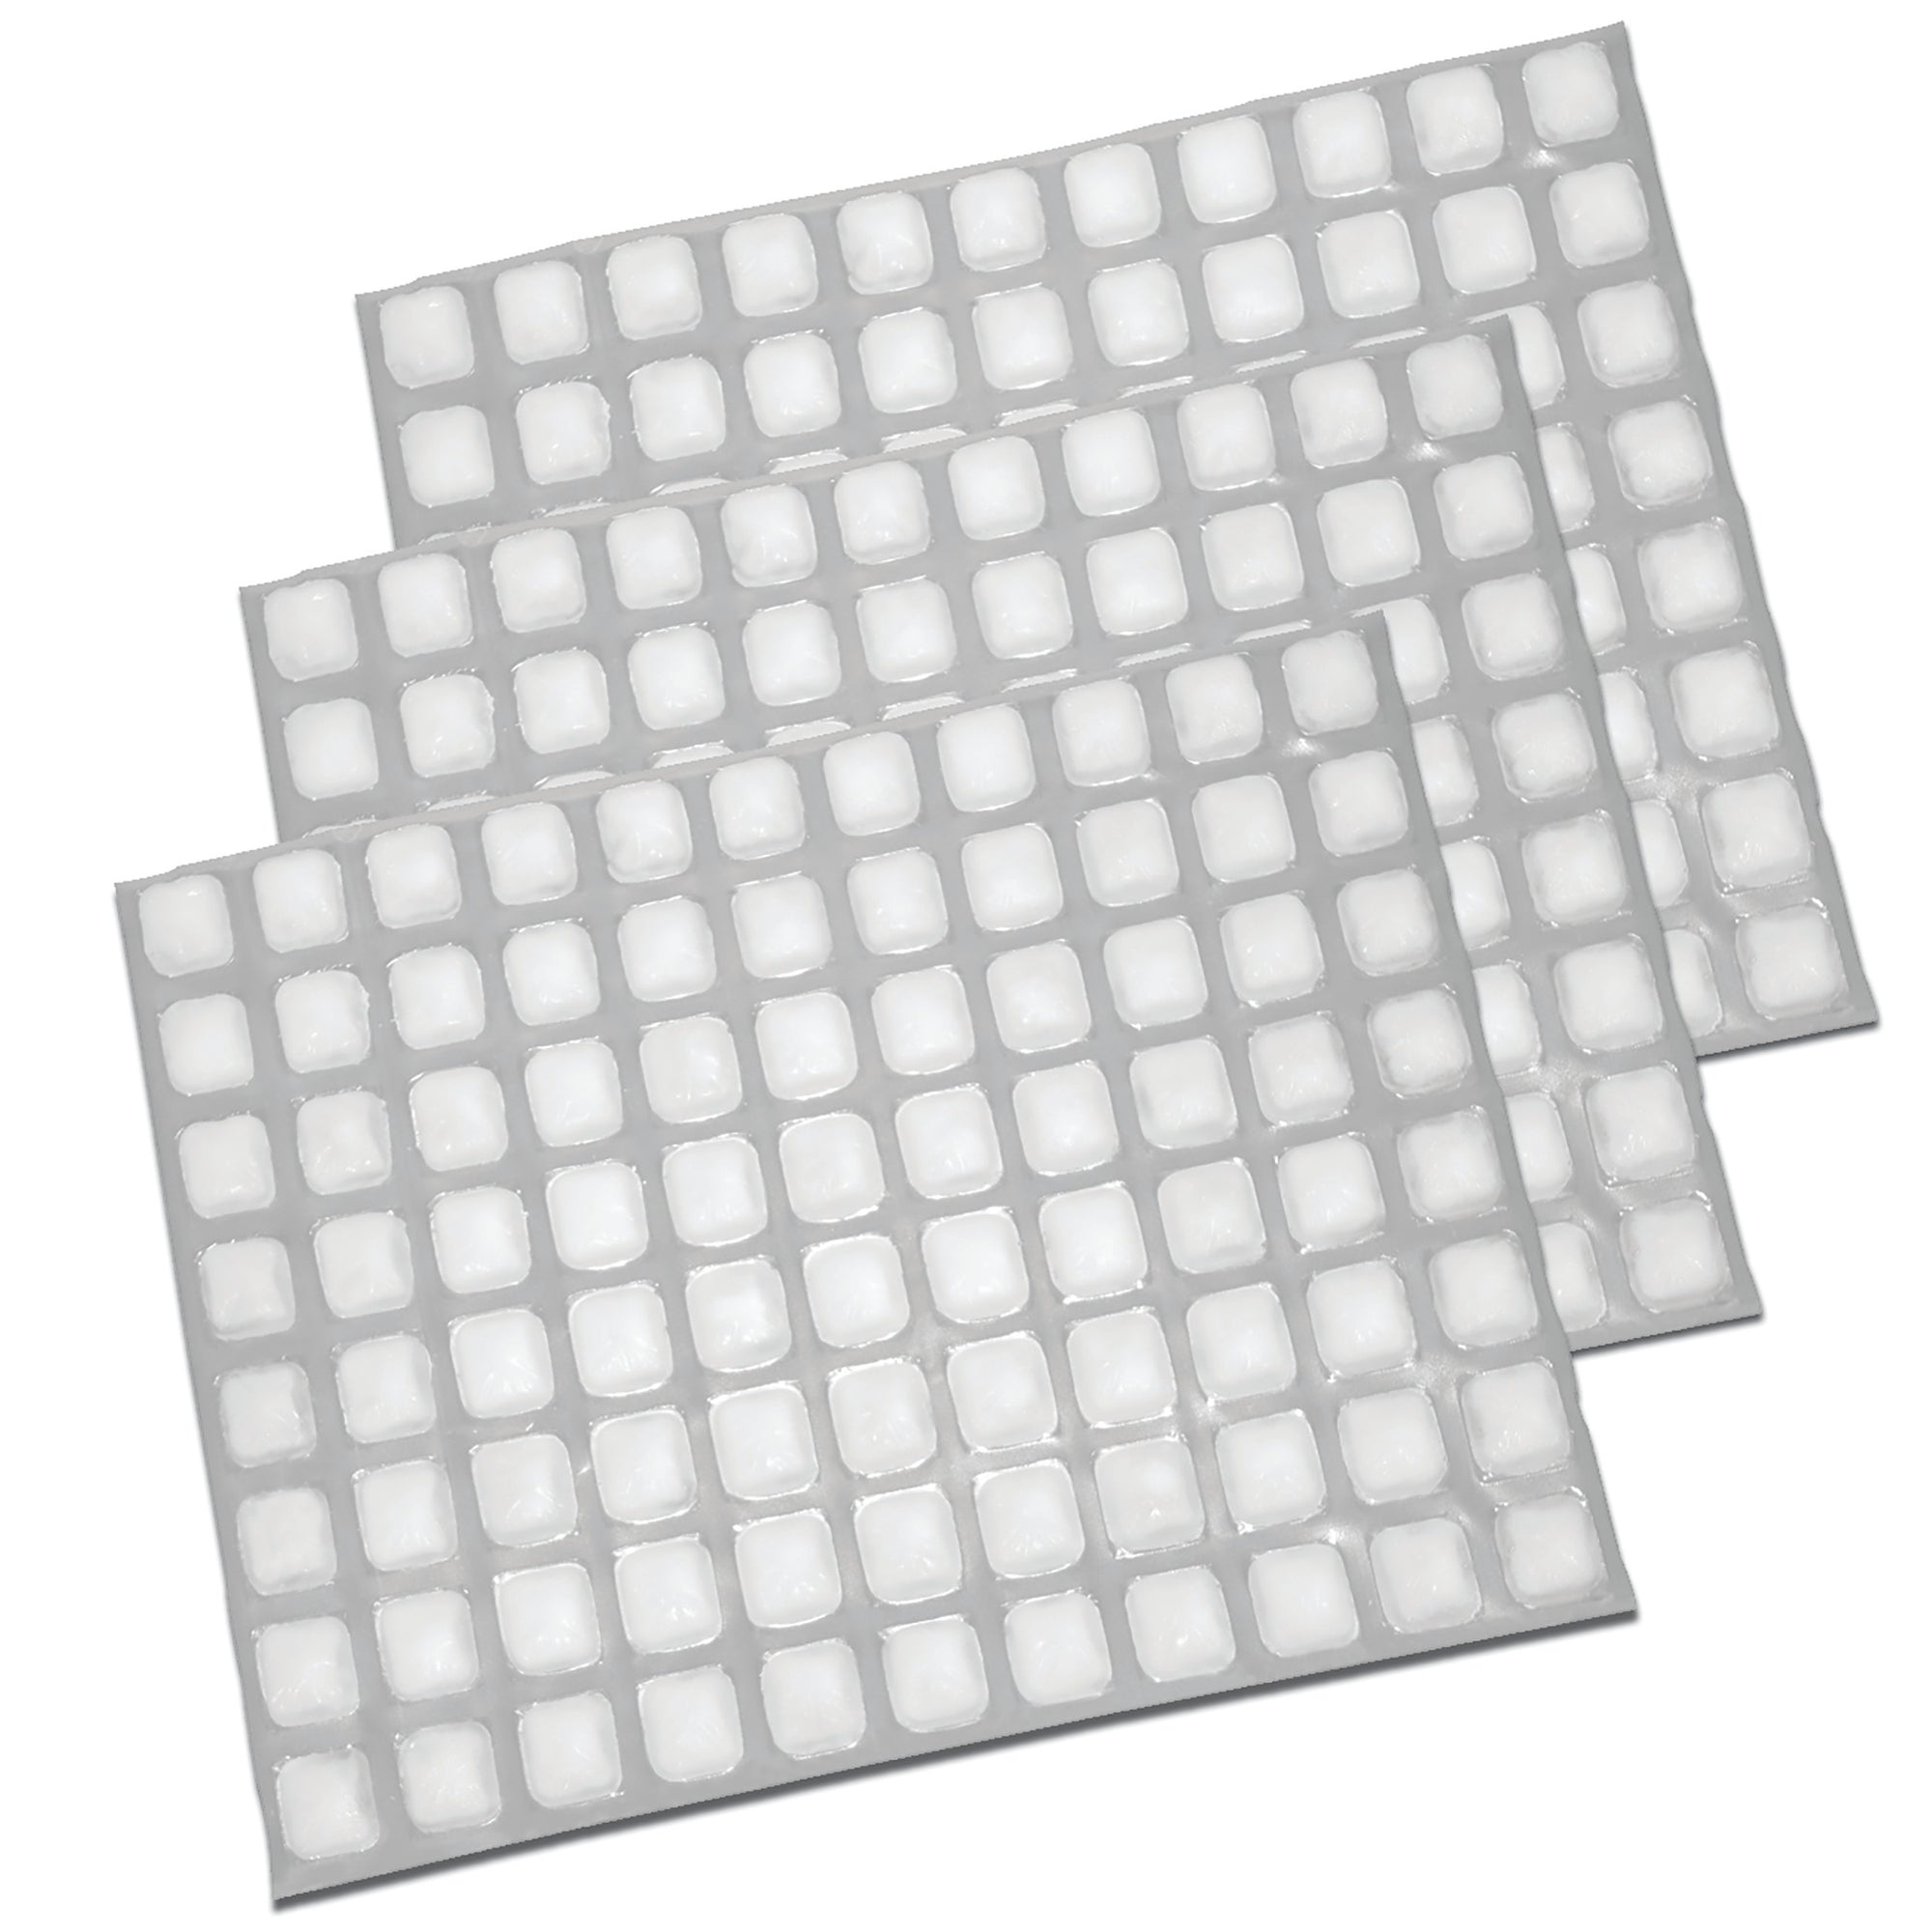 Single FlexiFreeze ice sheet with 88 cubes